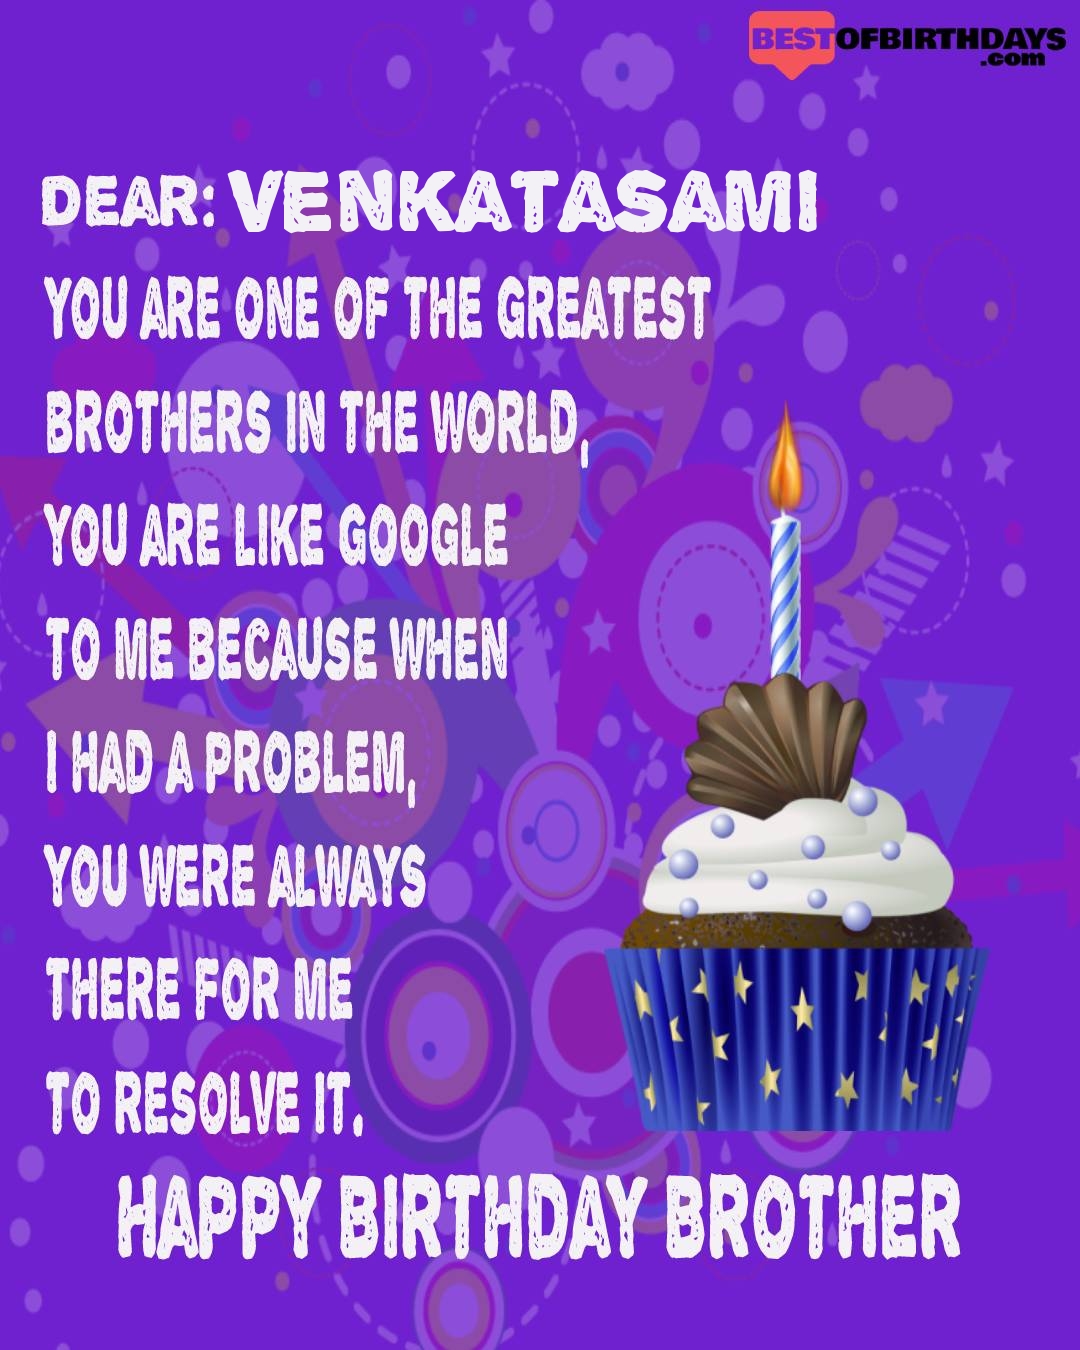 Happy birthday venkatasami bhai brother bro